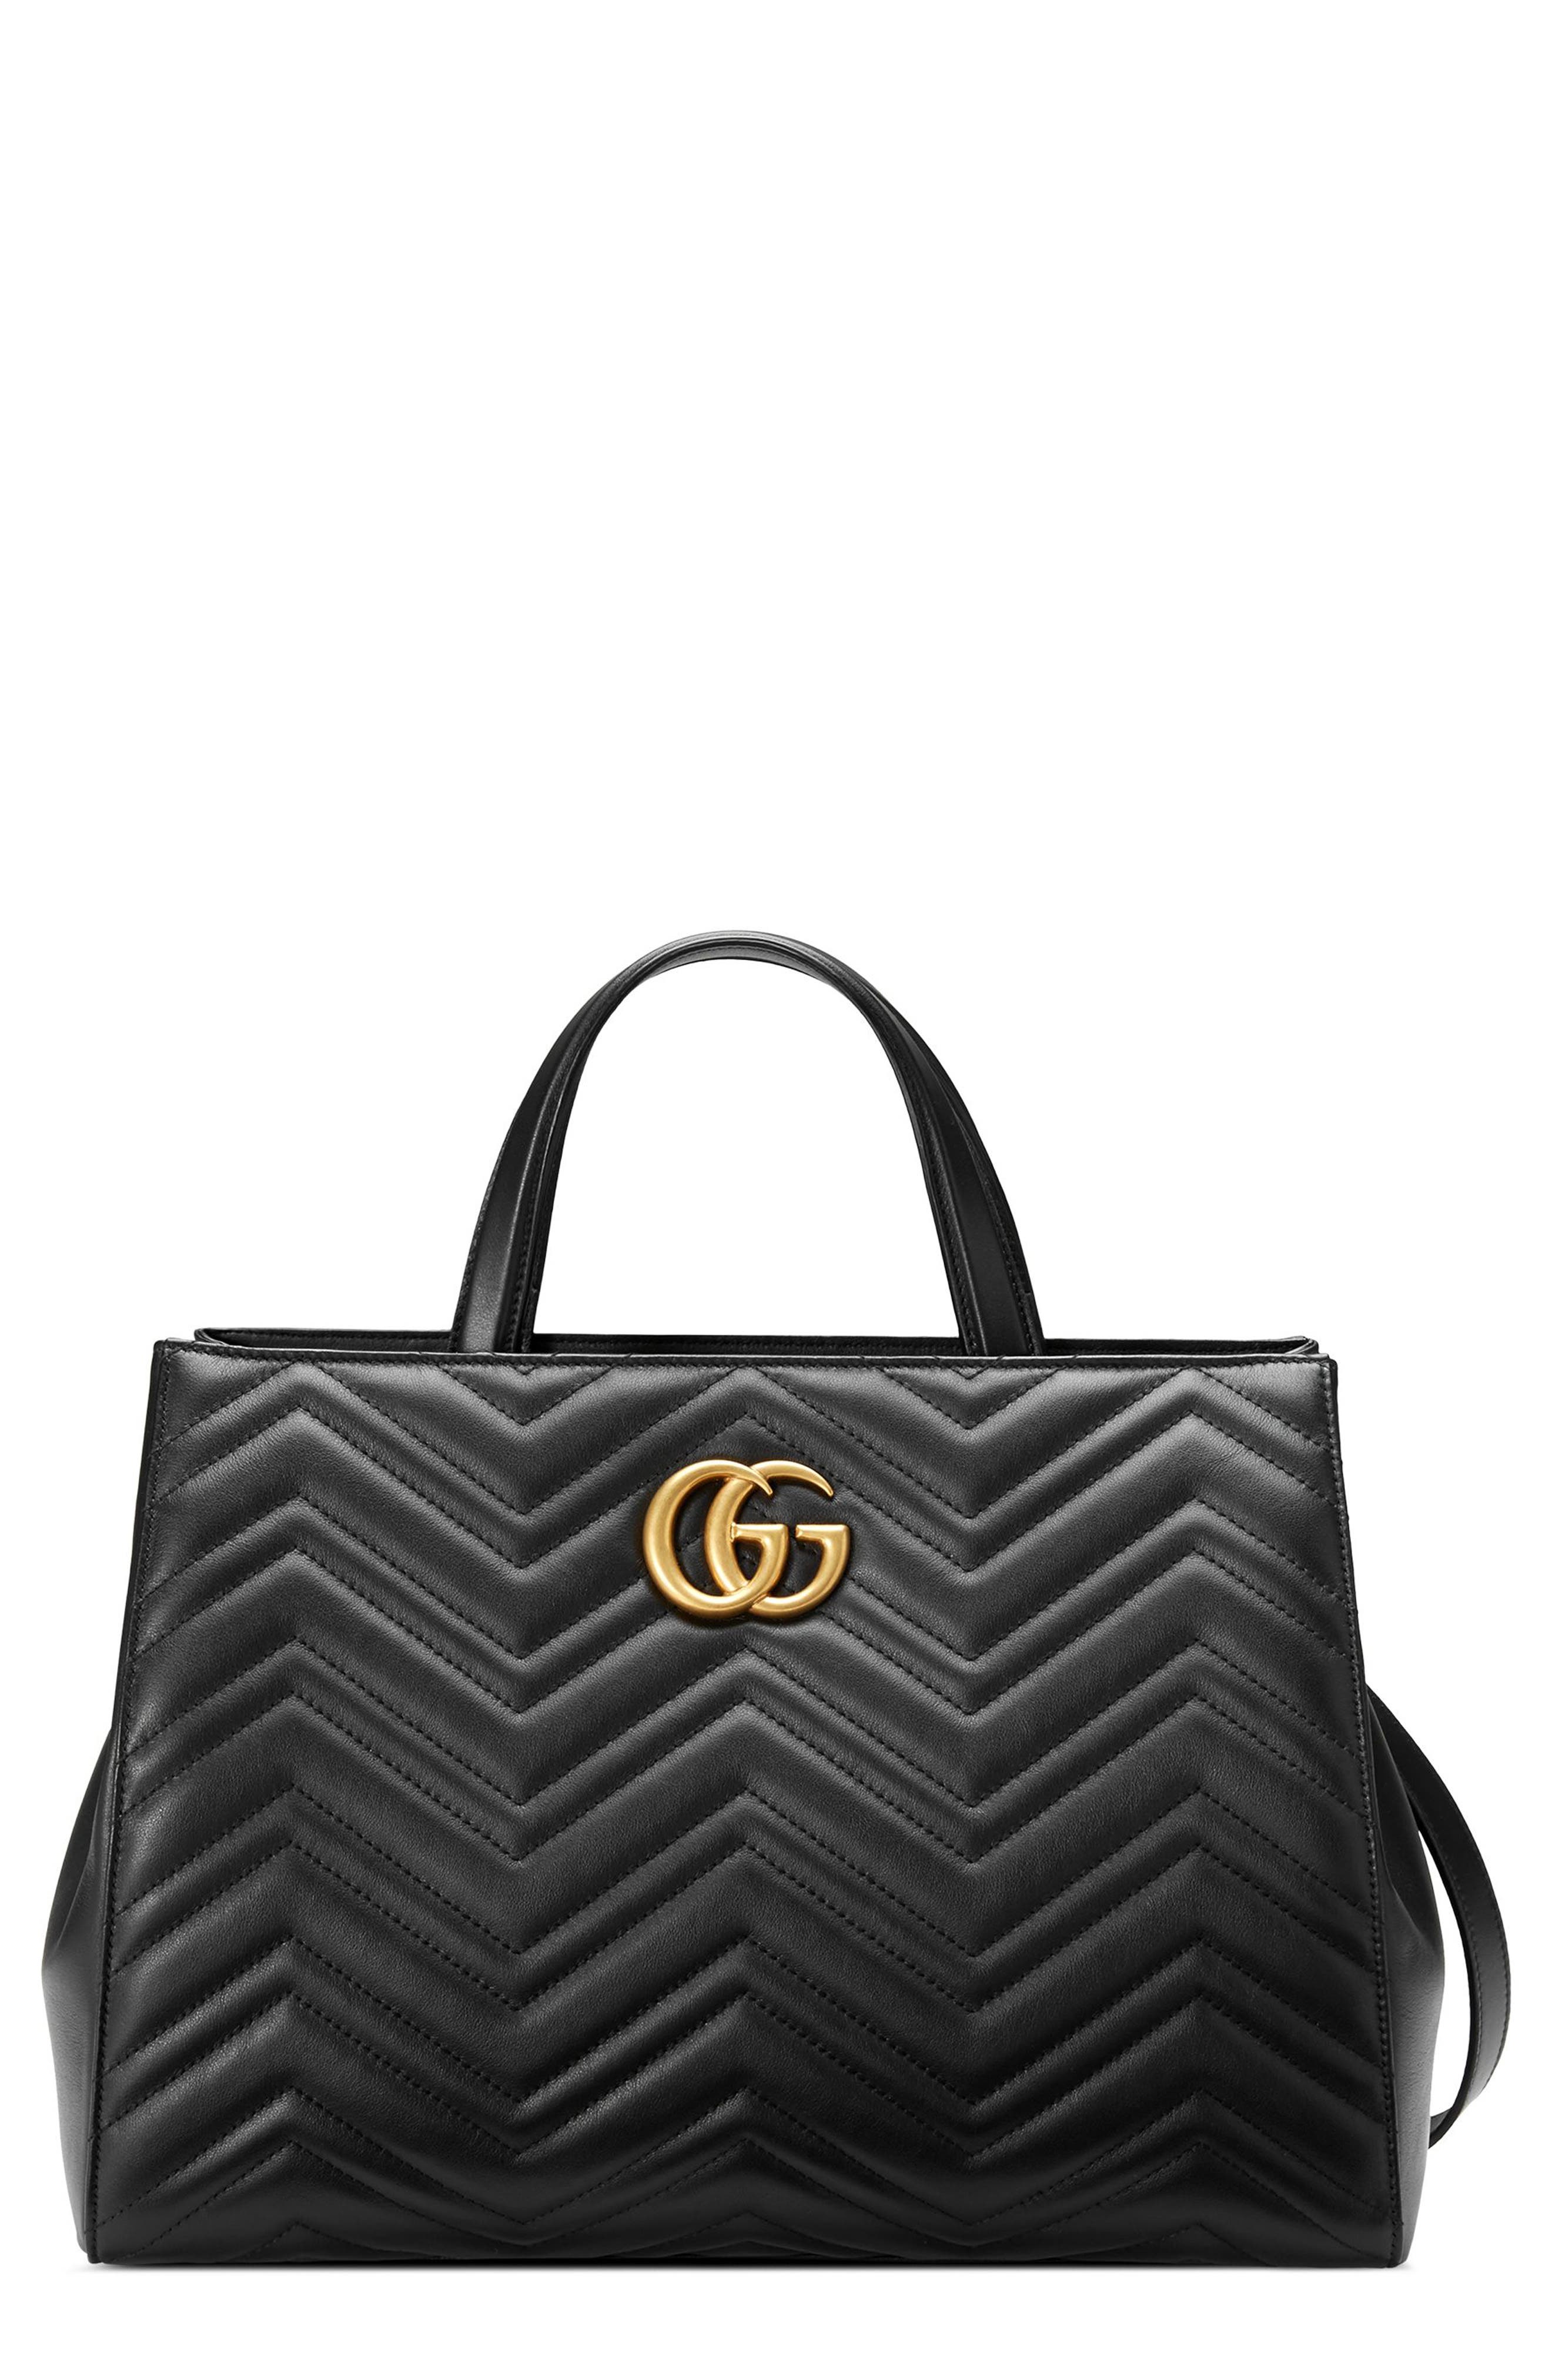 Gucci Gg Marmont Medium Matelasse Leather Top Handle Shoulder Bag - Black | ModeSens